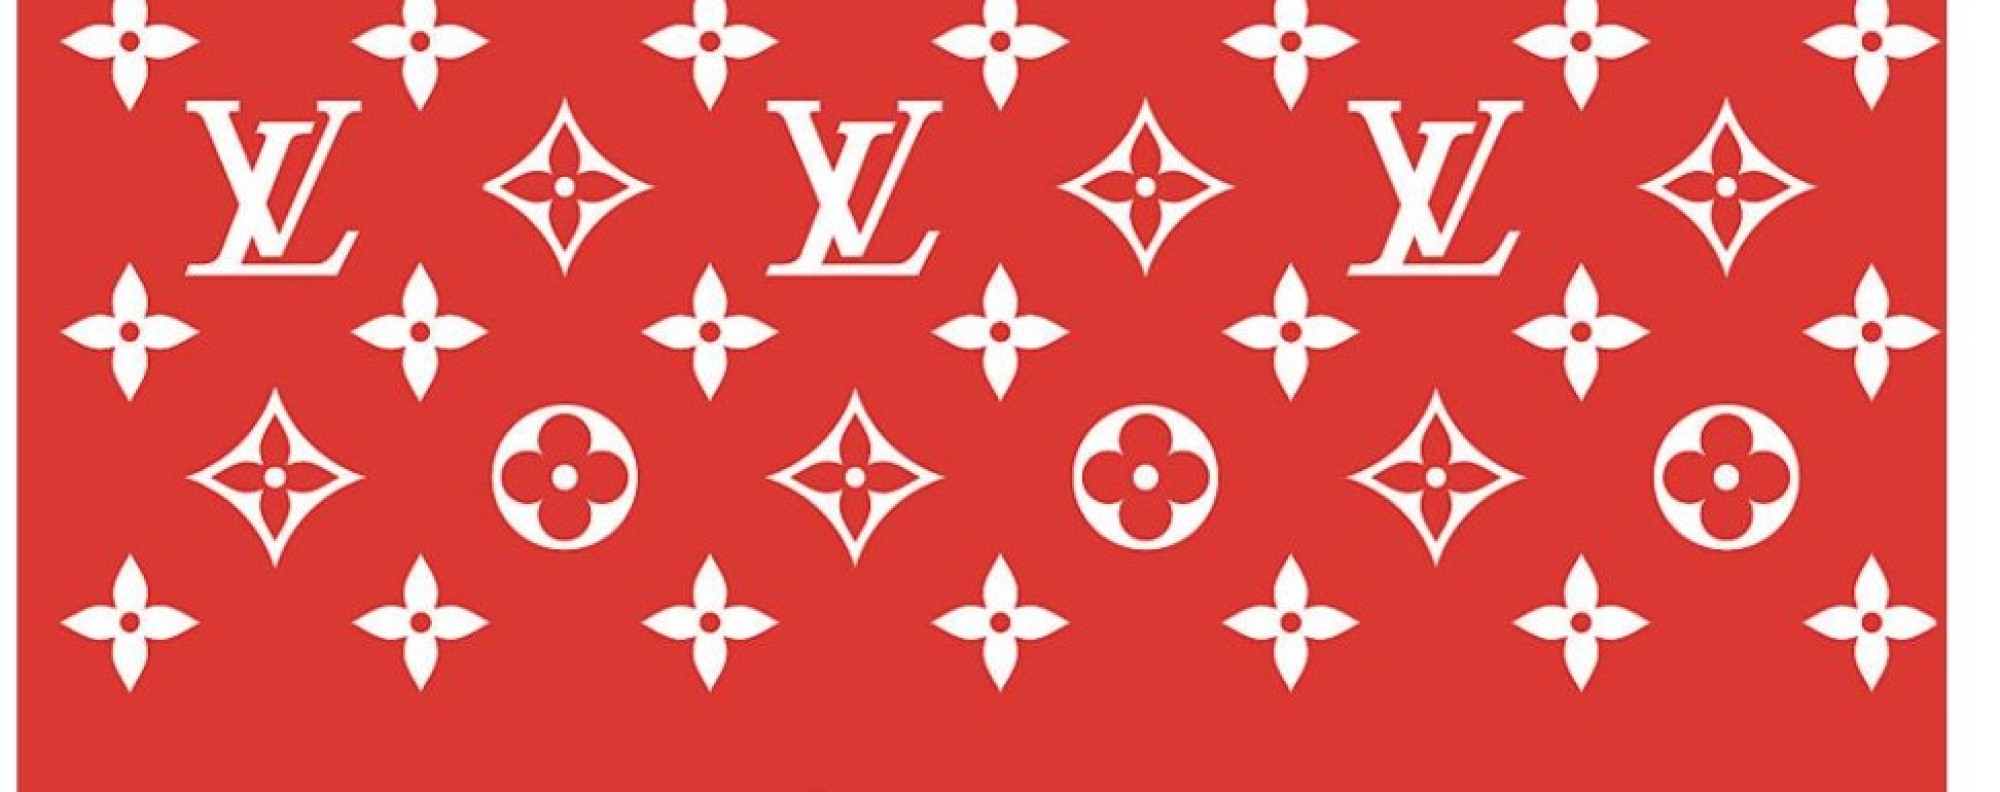 Wallpaper Supreme, Louis Vuitton, Handbag, Text, Red, Background